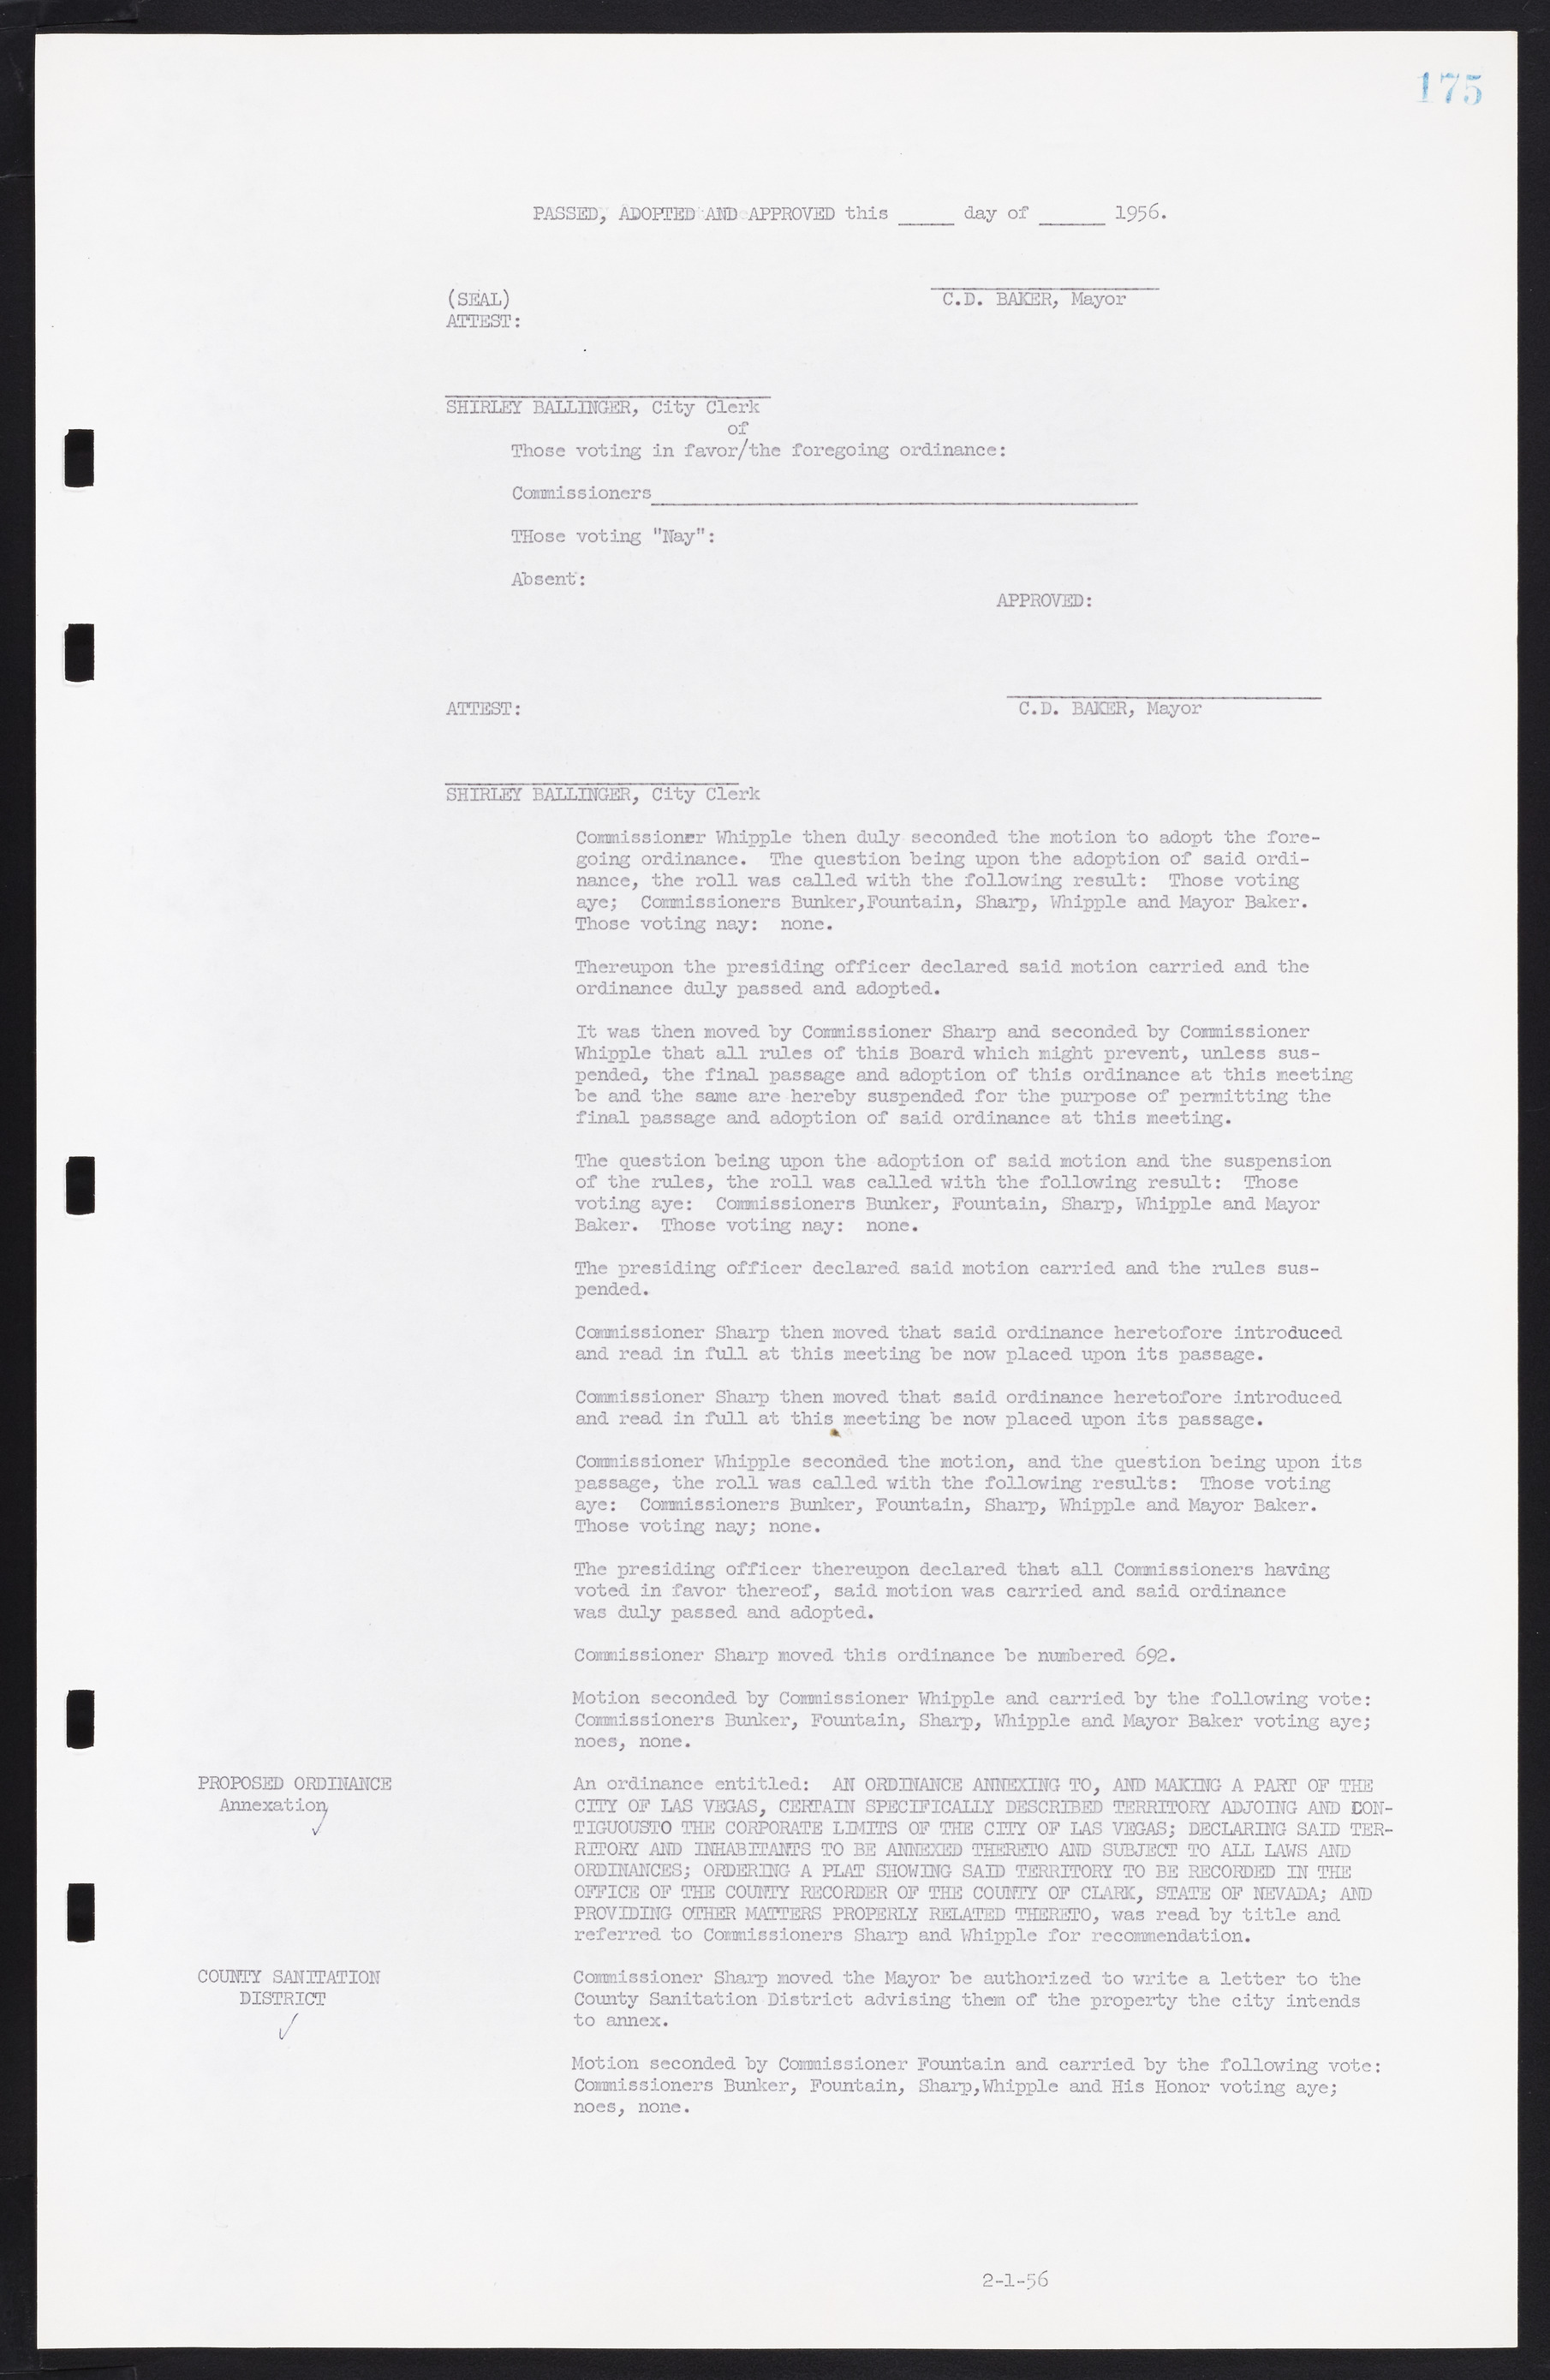 Las Vegas City Commission Minutes, September 21, 1955 to November 20, 1957, lvc000010-191